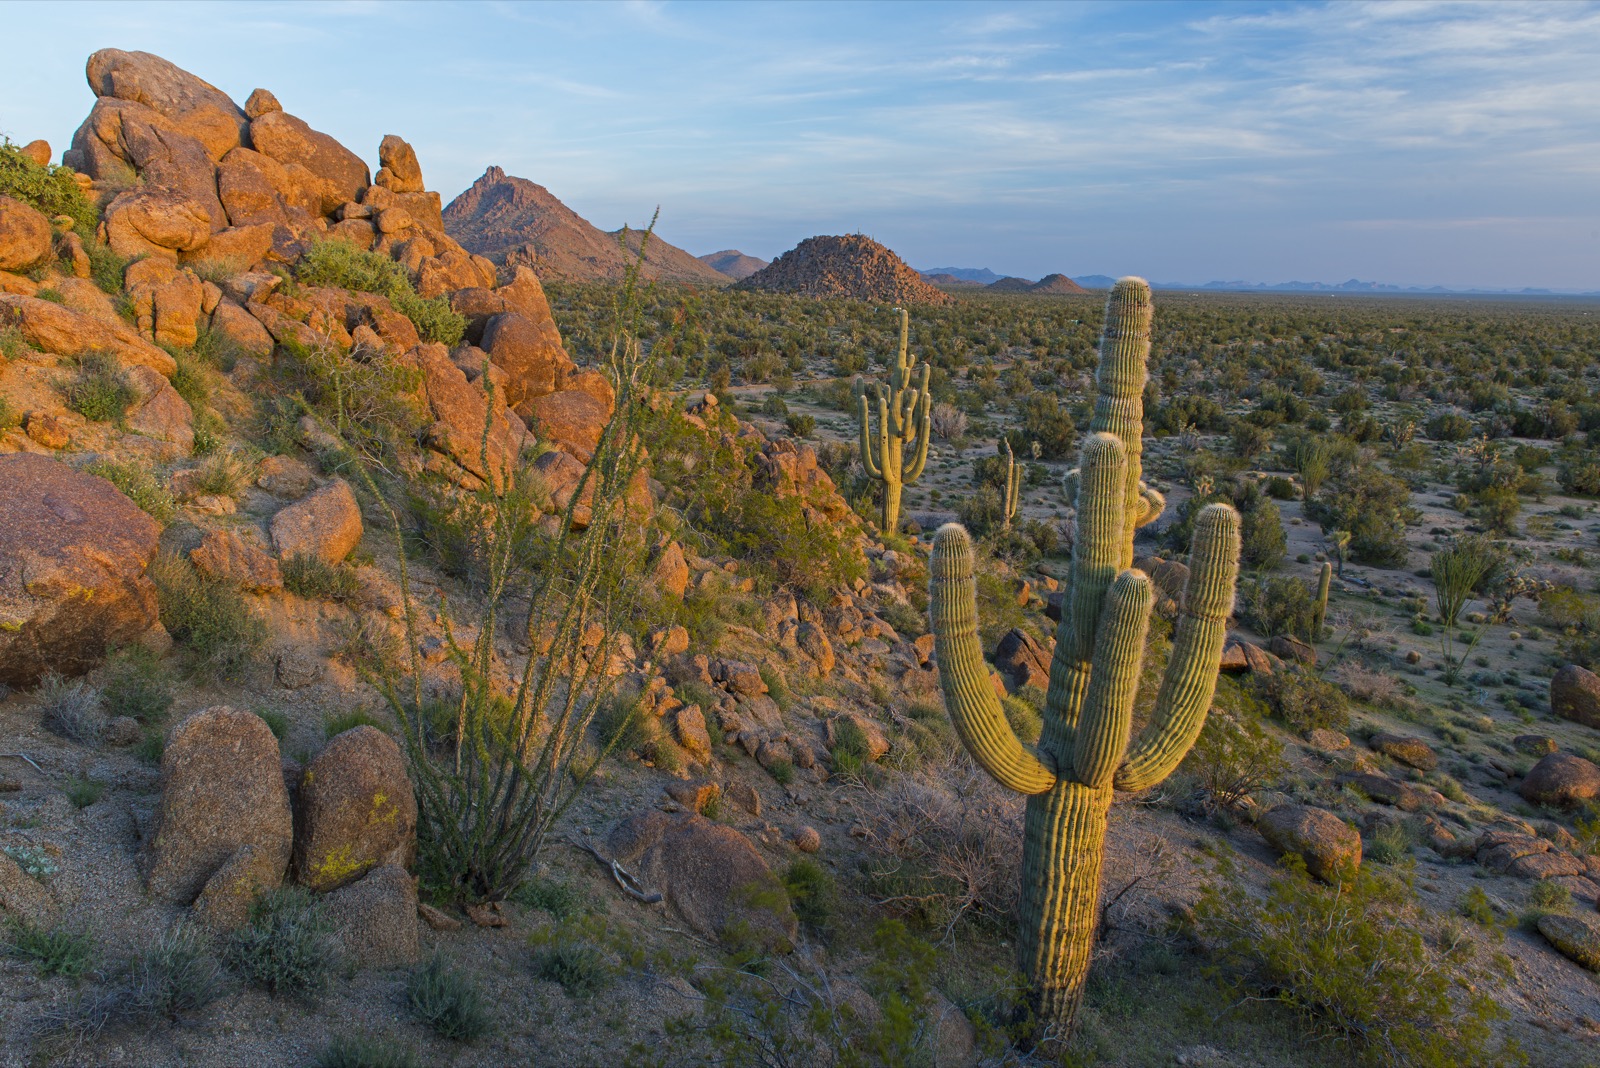 Cacti standing tall across an arid landscape